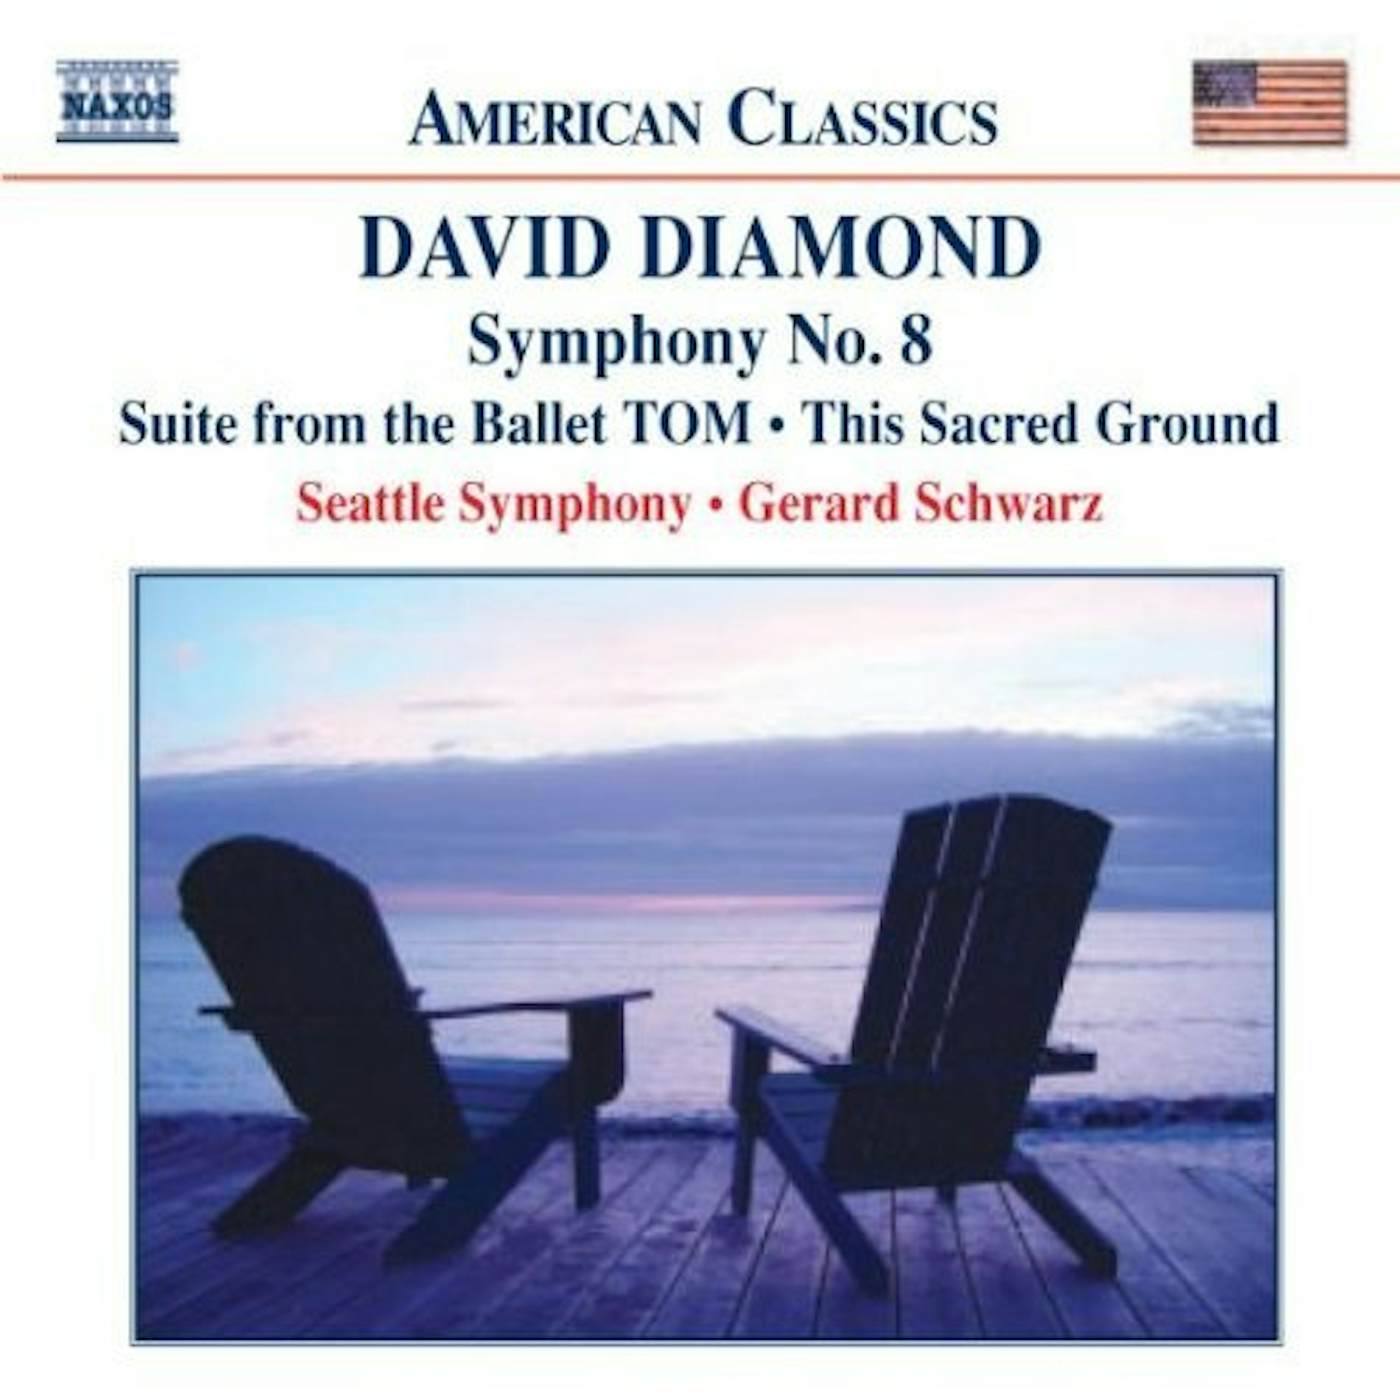 David Diamond SYMPHONY NO. 8 CD